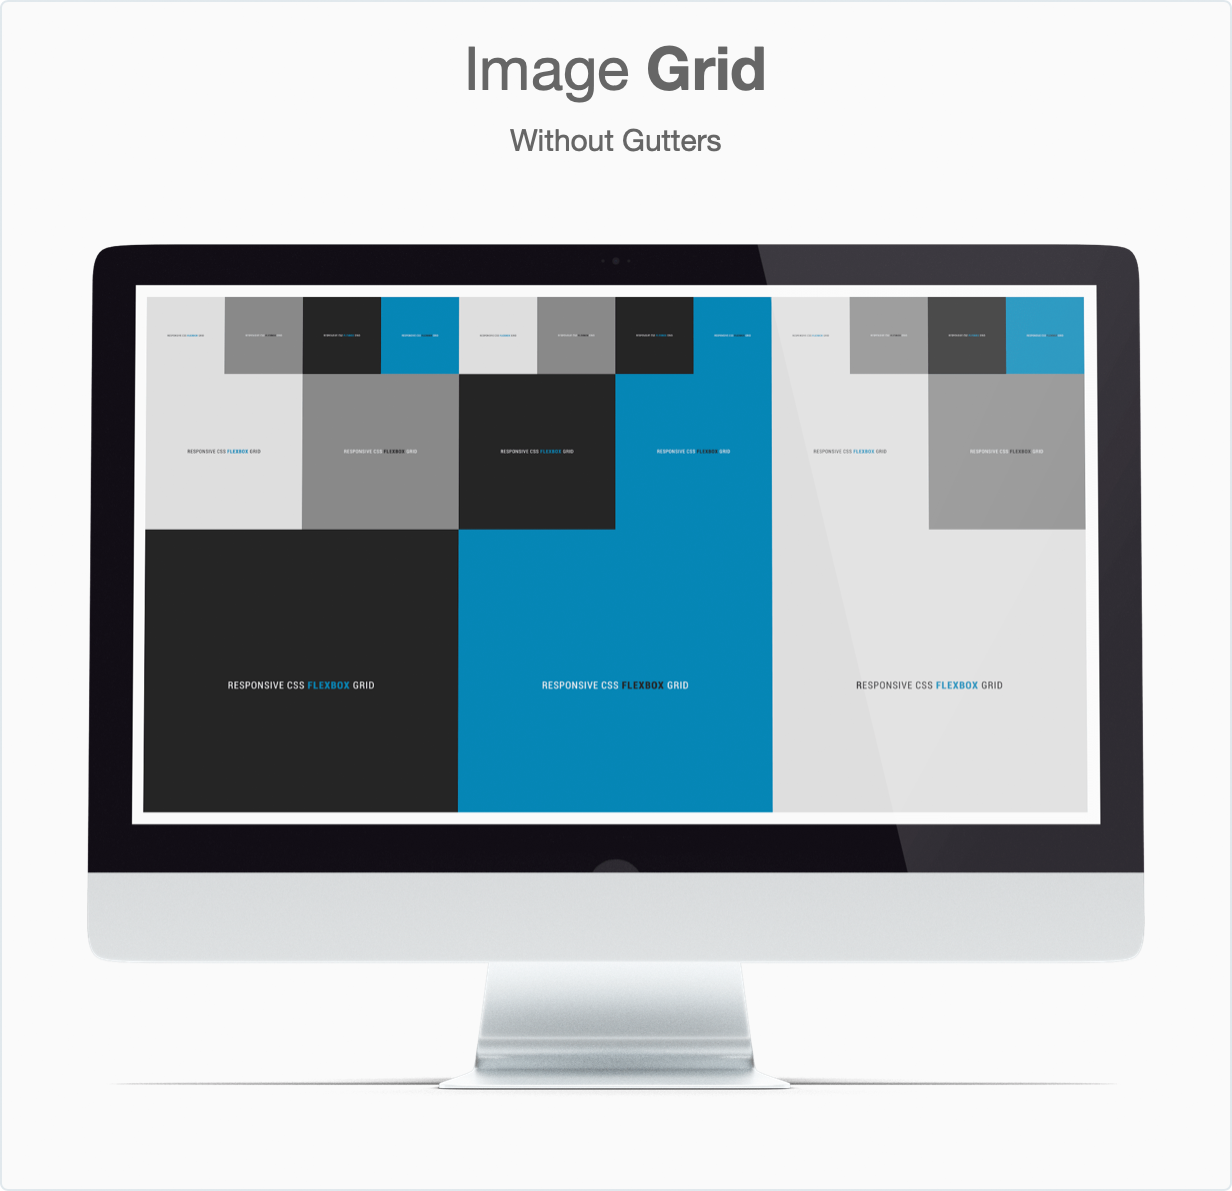 Responsive CSS Flexbox Grid Framework (Masonry Supported) - Image Grid Gutterless